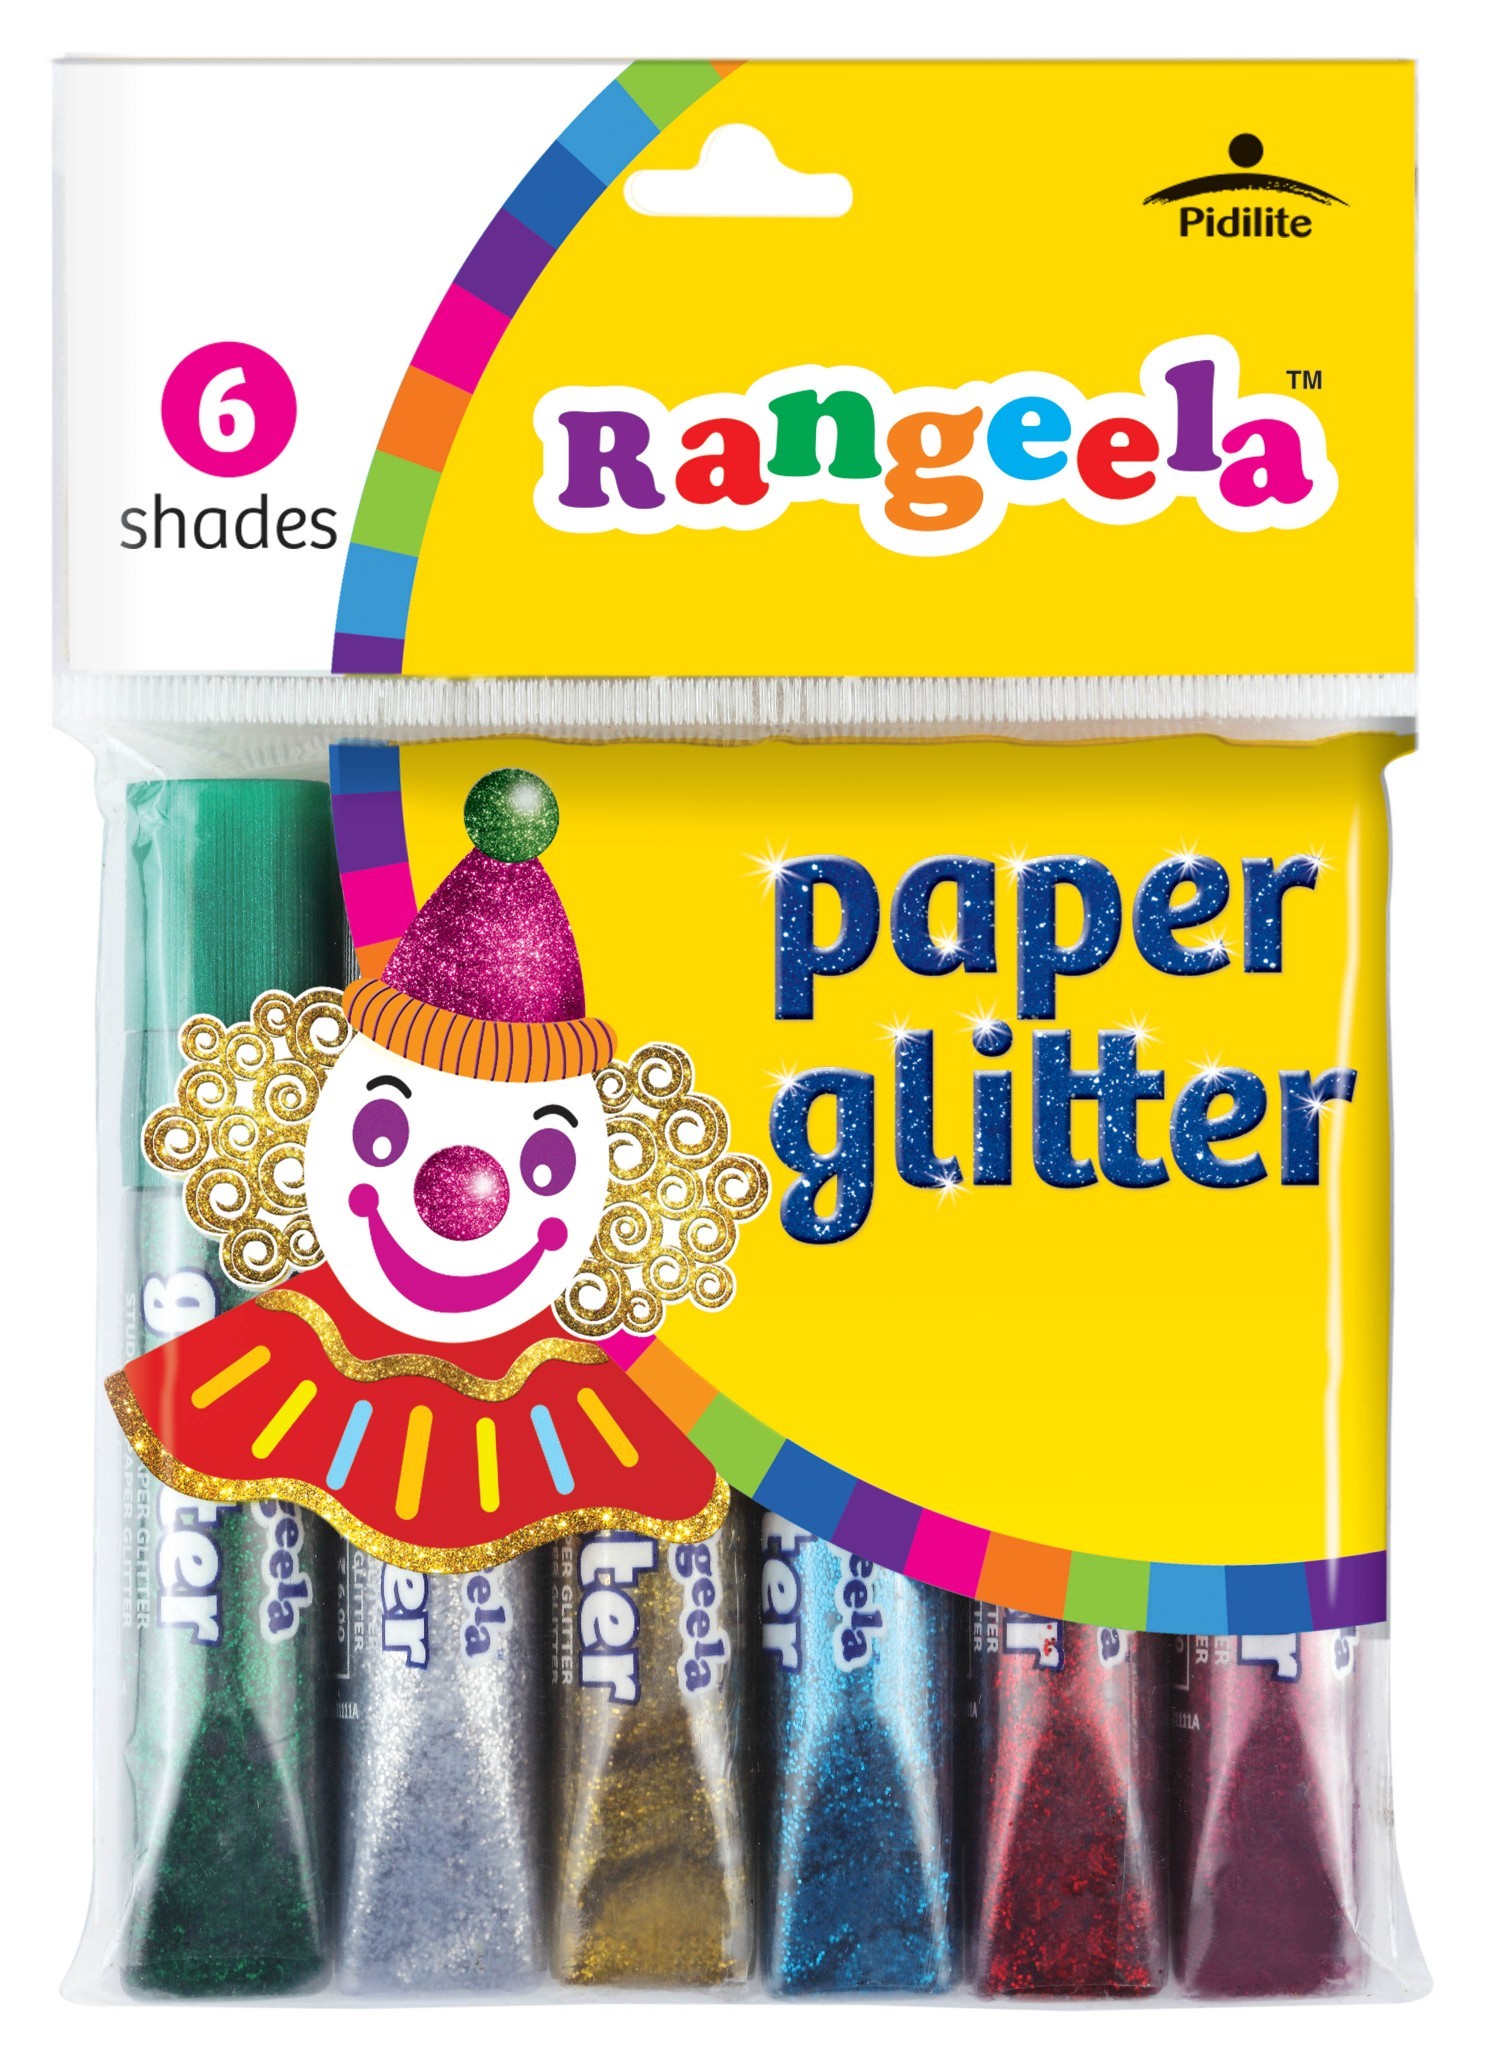 Rangeela Paper Glitter, 6 Shades